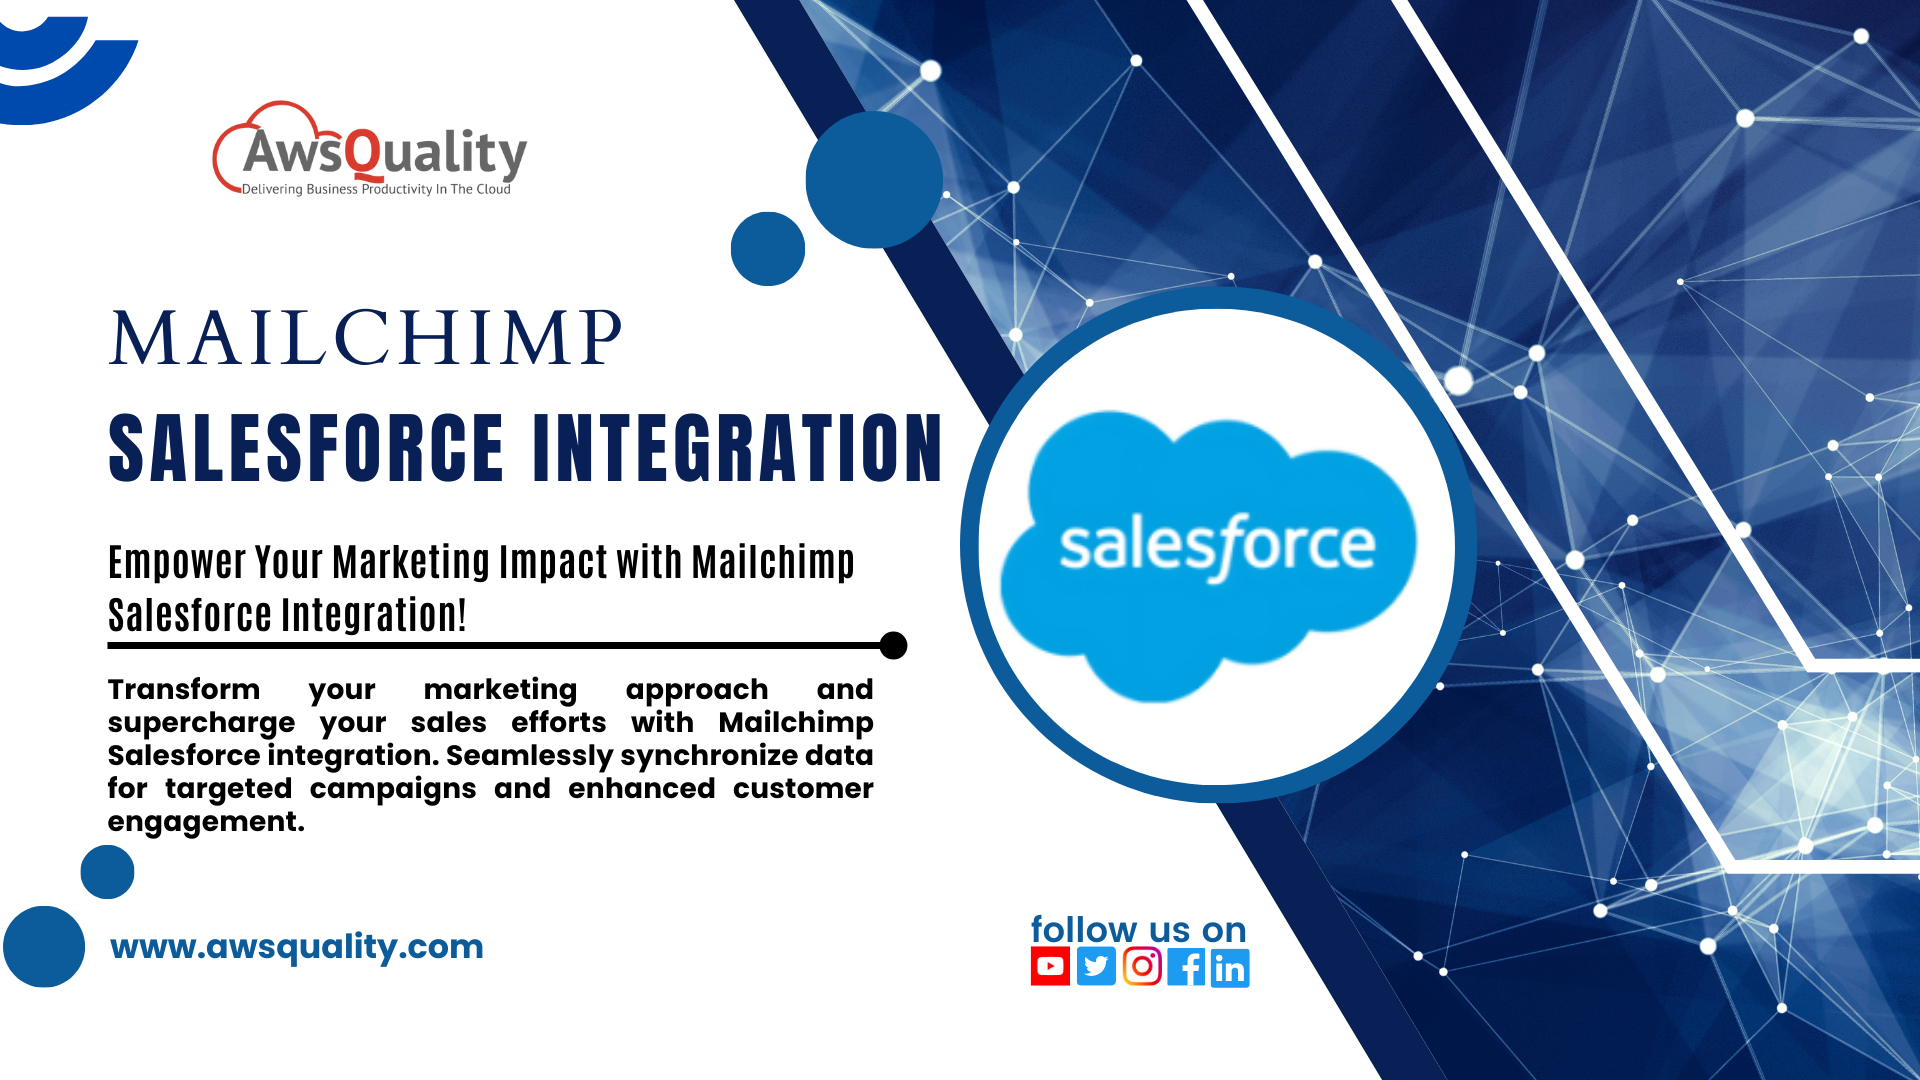 Mailchimp Salesforce integration